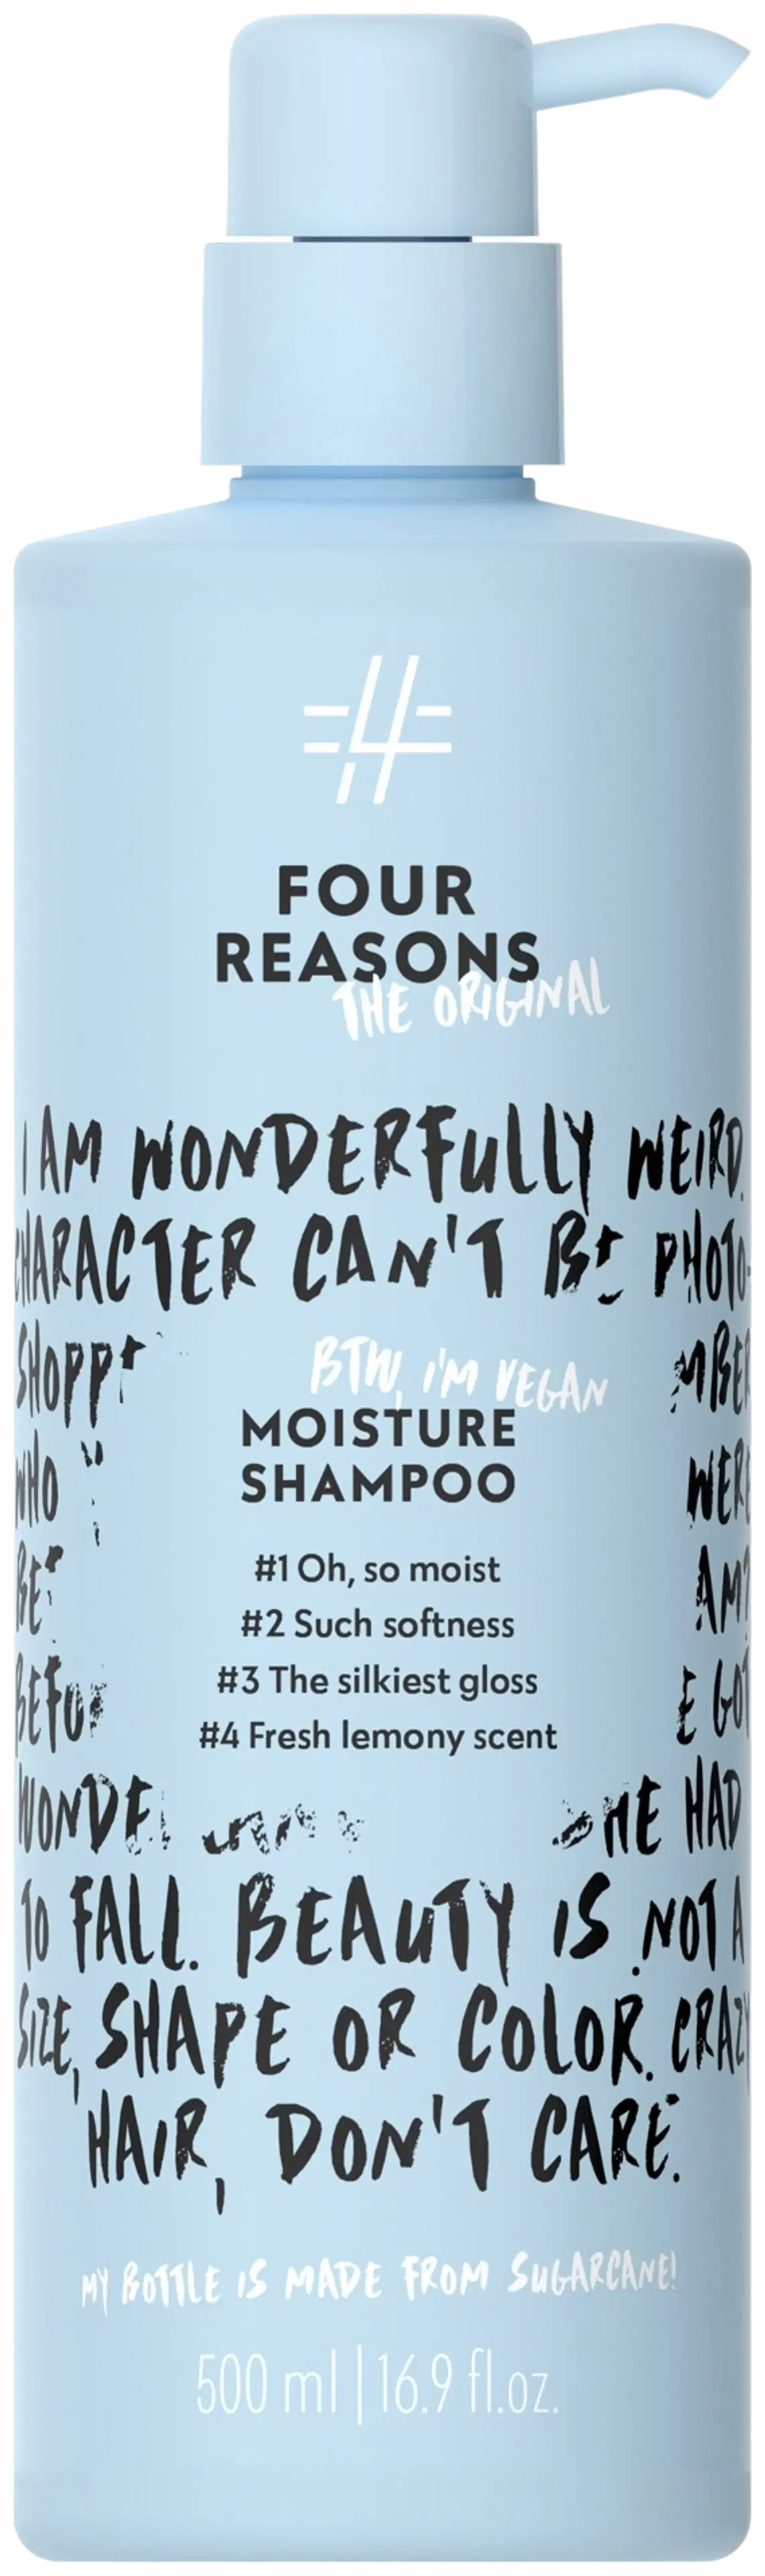 Four Reasons Original Moisture Shampoo 500 ml